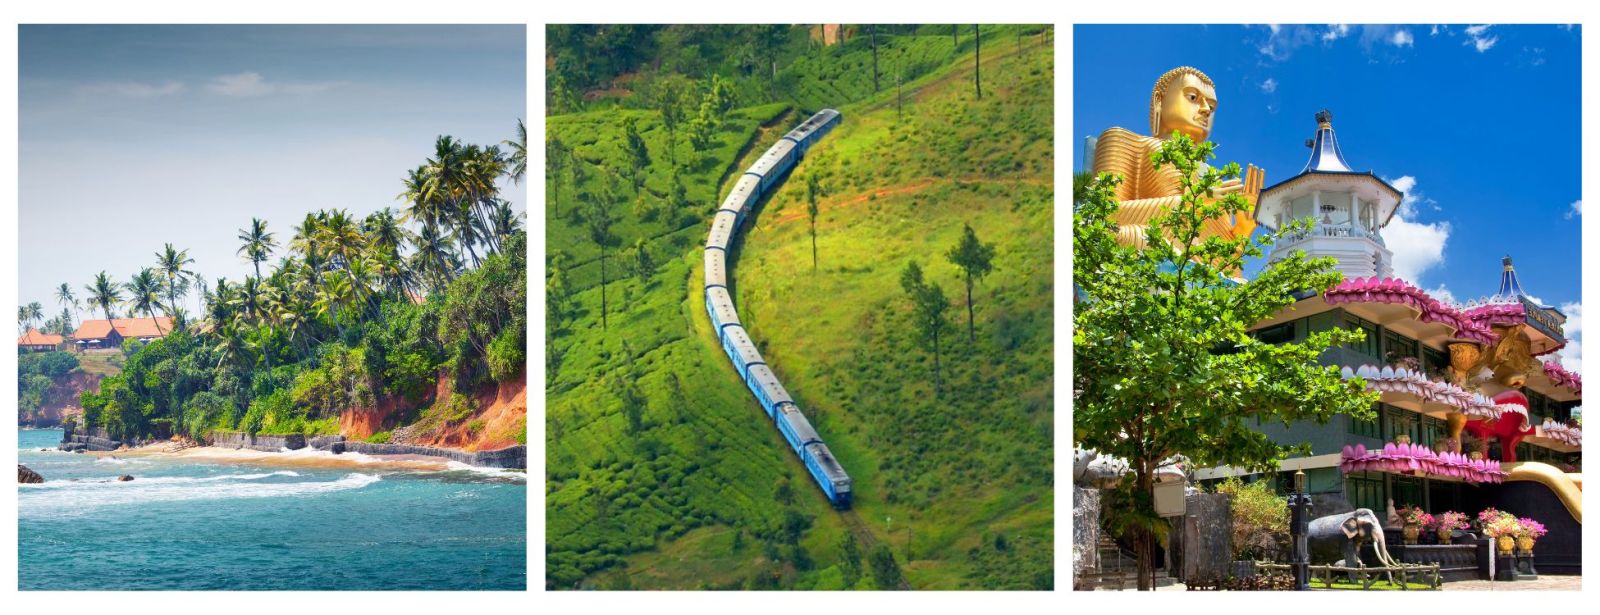 Sri Lanka Holidays. Beaches, Blue Train & Temples